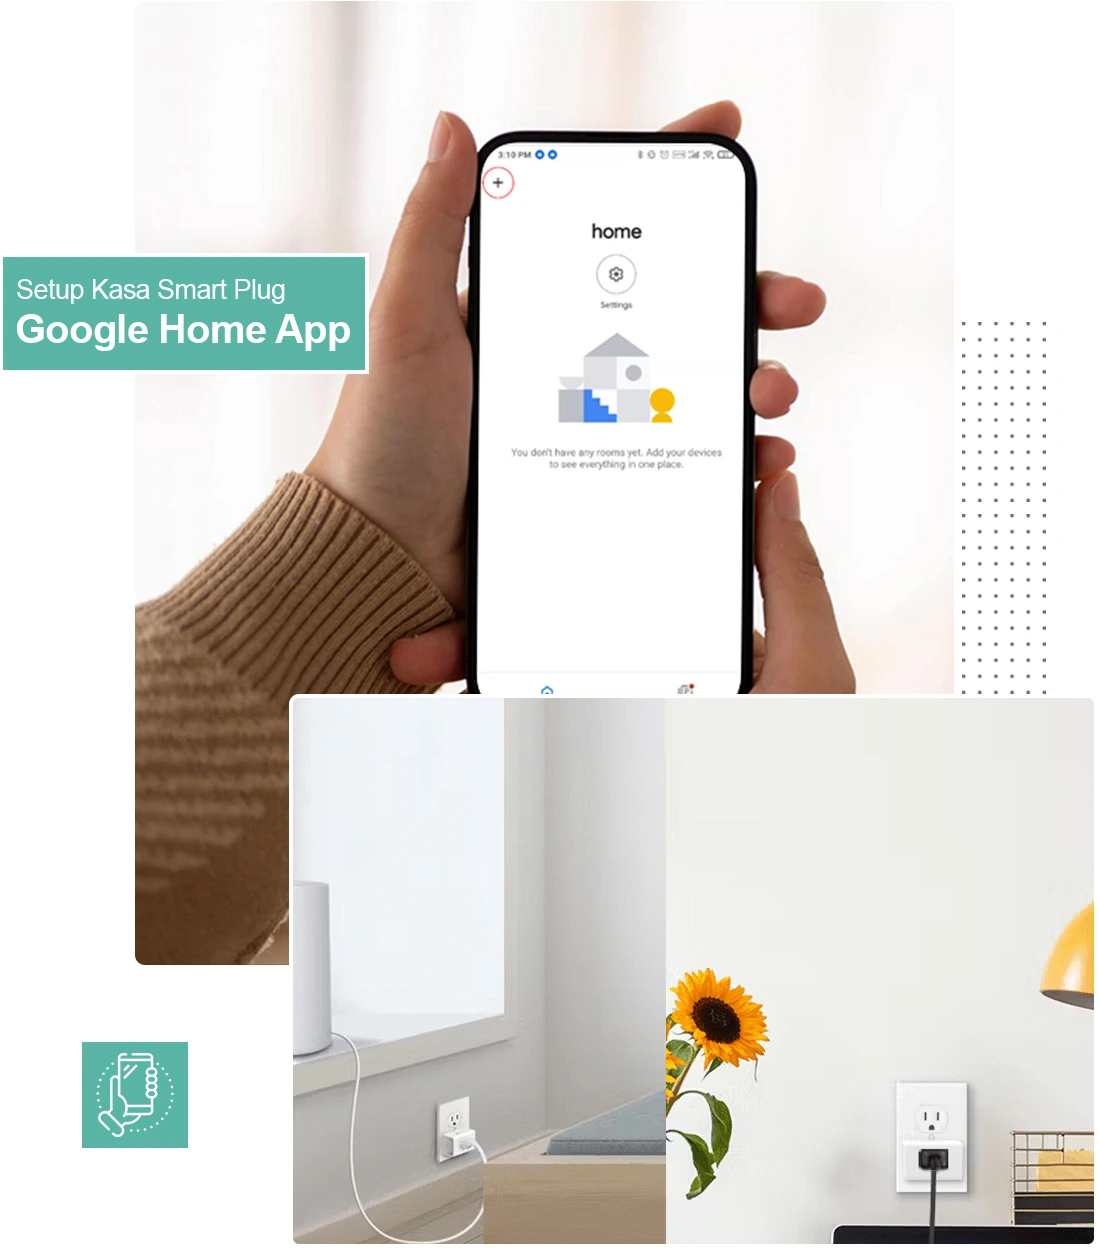 How to Setup Kasa Smart Plug in the Google Home app